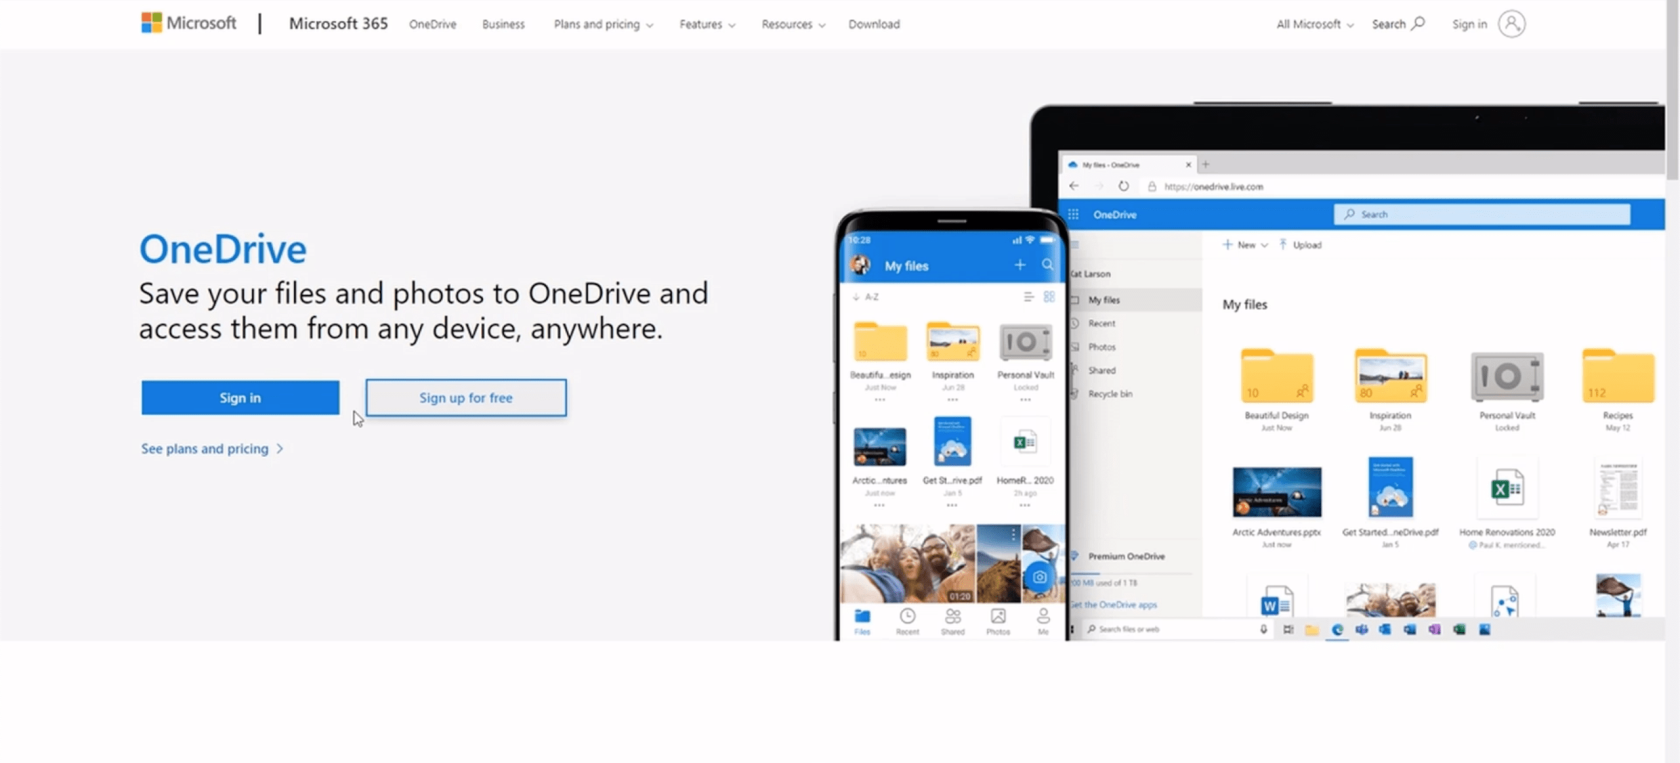 Power Apps 環境セットアップ: OneDrive および Google Drive に接続する